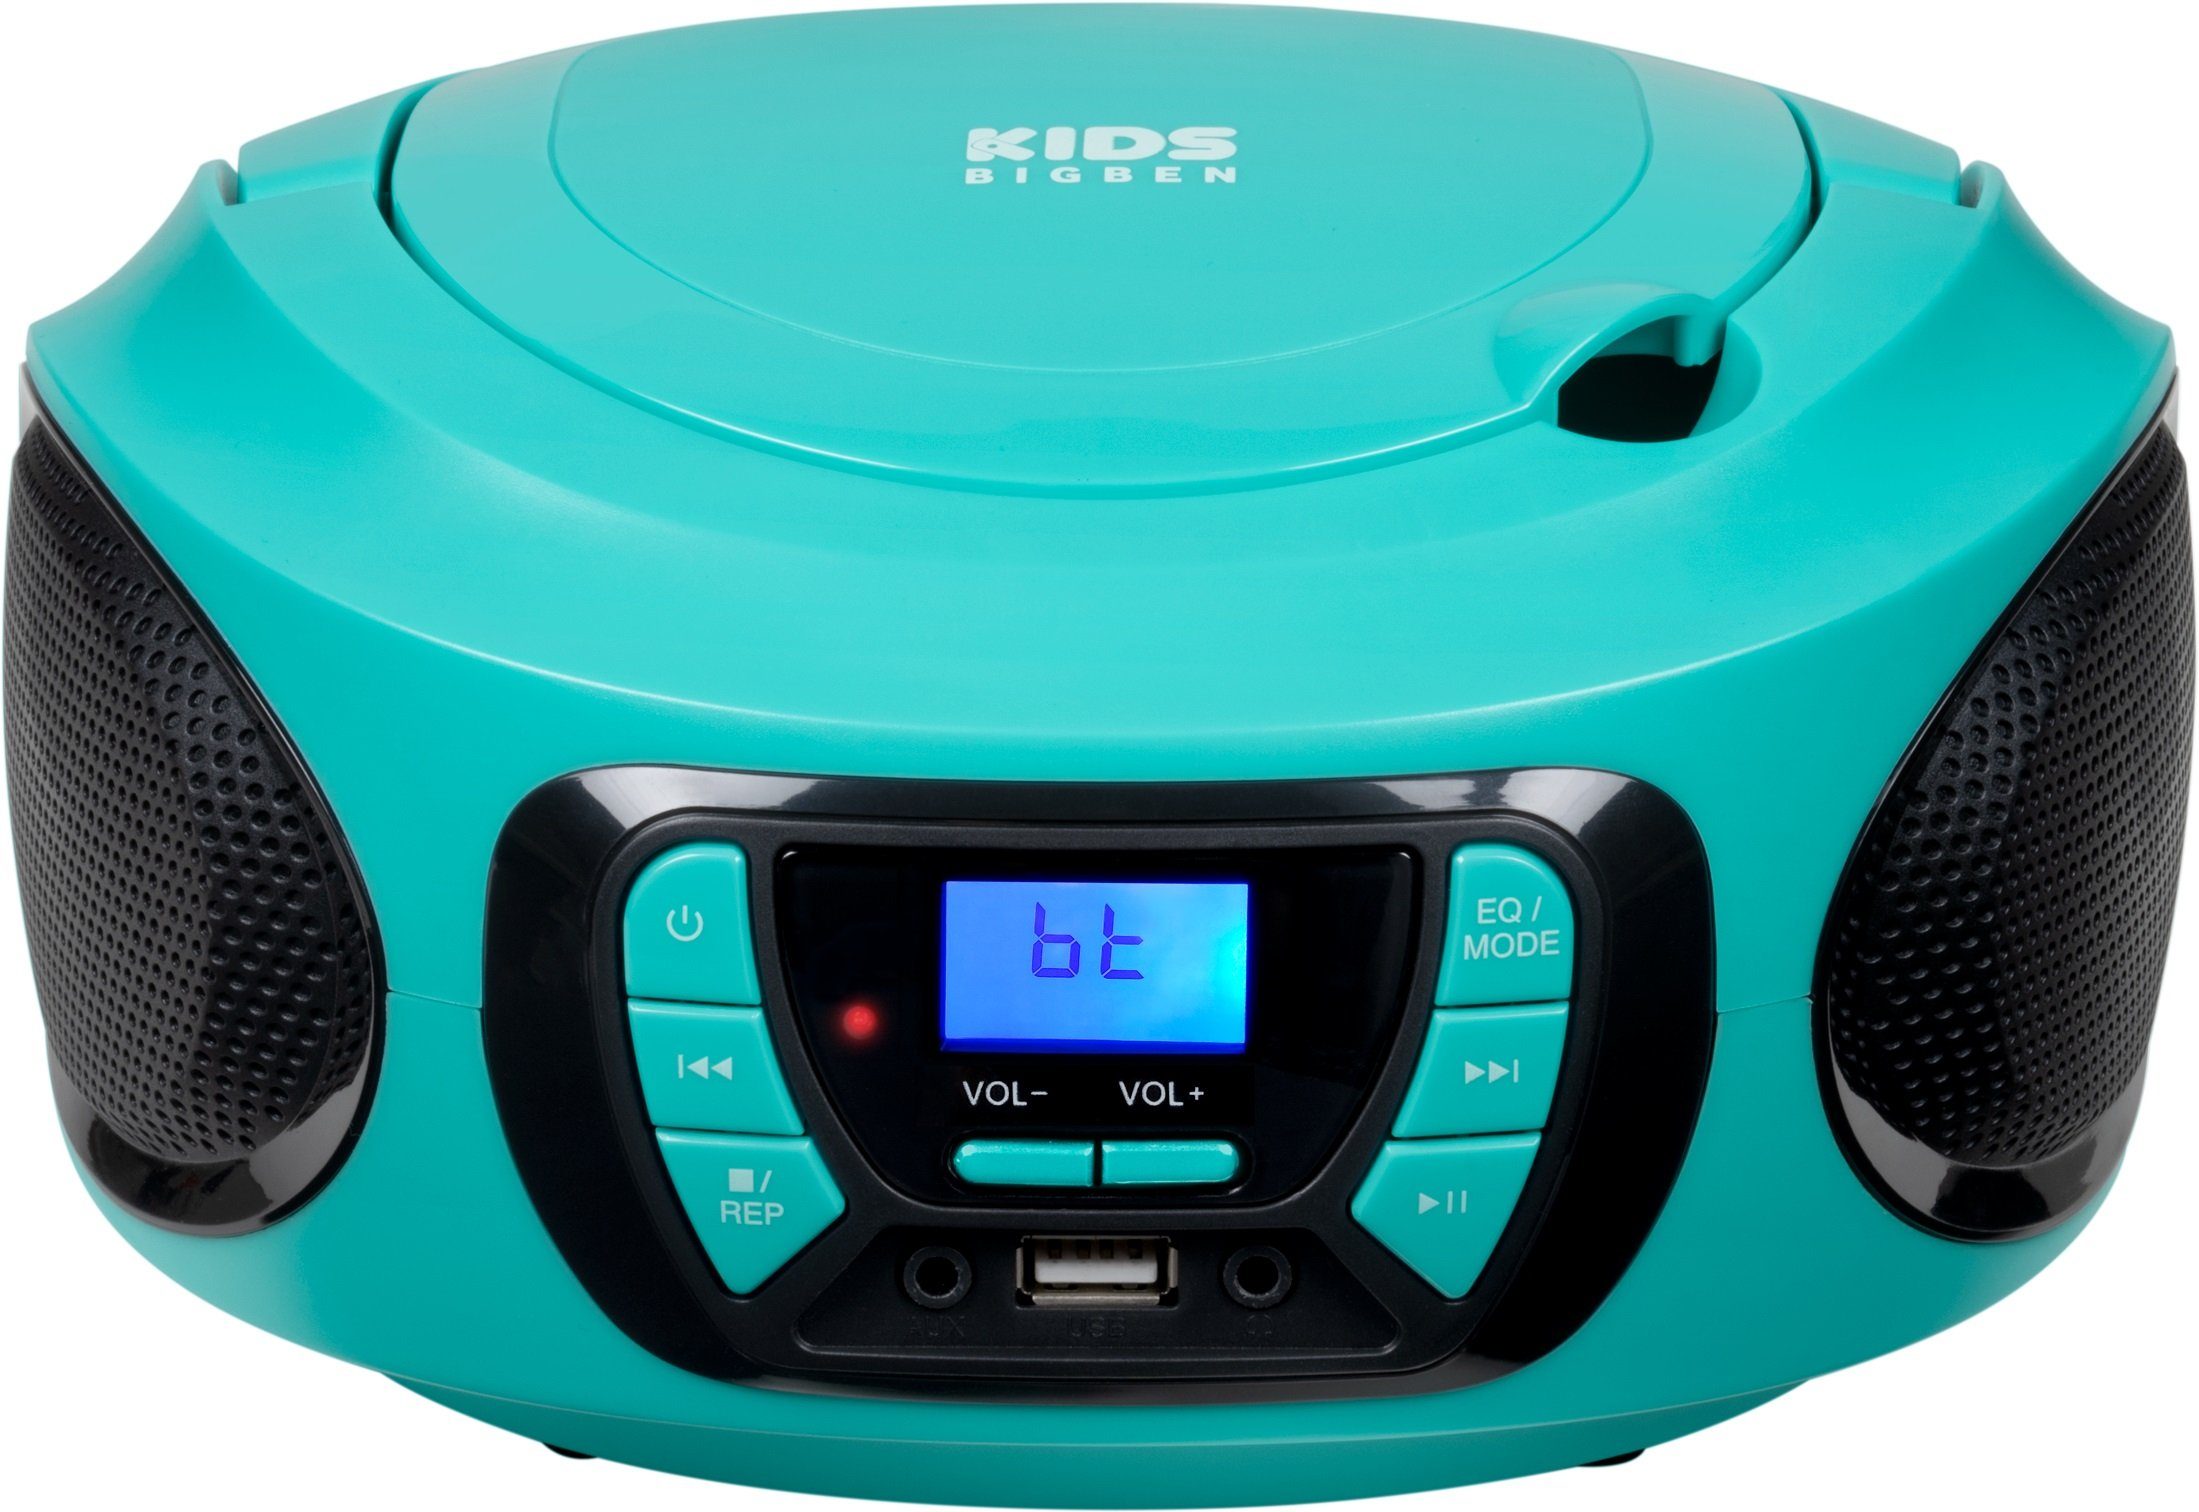 CD/Radio AU387315 Tragbares BigBen blau Kids USB/BT CD-Radiorecorder (FM-Tuner)